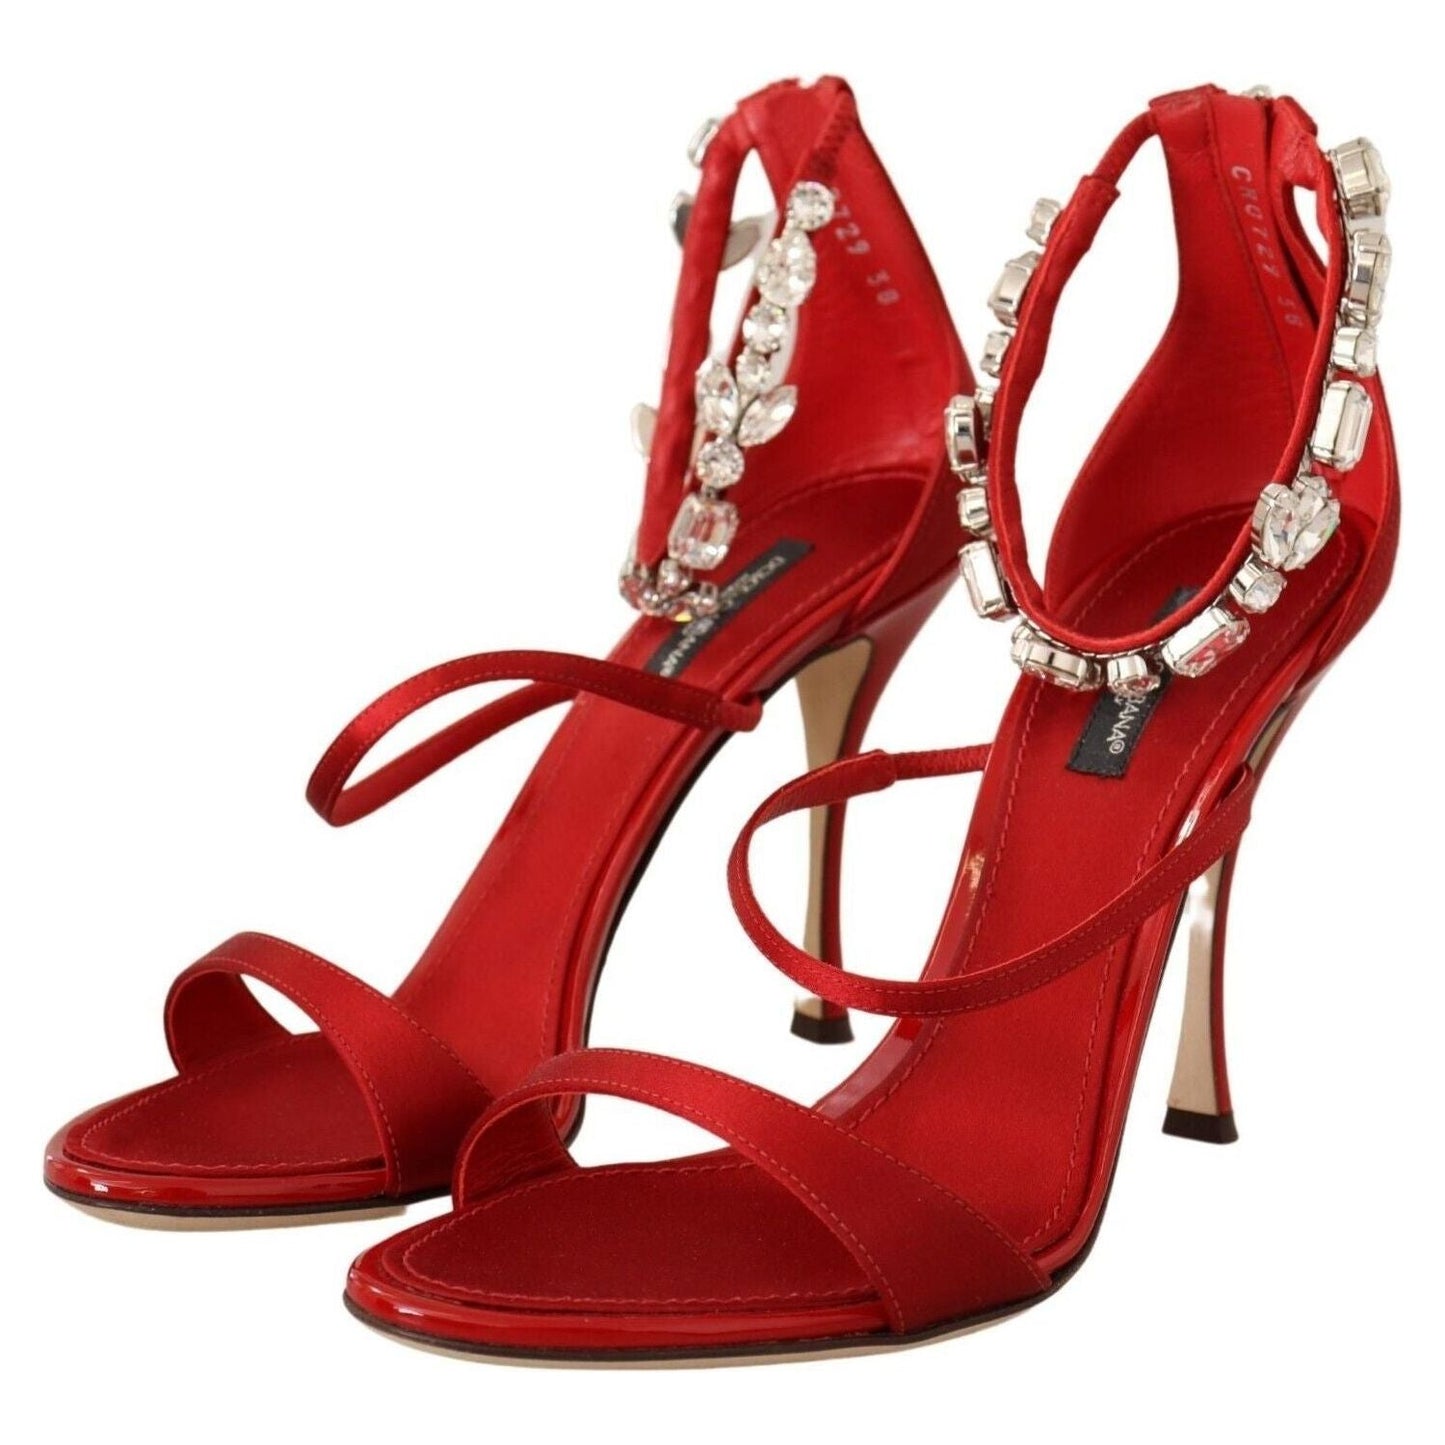 Dolce & Gabbana Red Crystal-Embellished Heel Sandals Heeled Sandals red-satin-crystals-sandals-keira-heels-shoes s-l1600-2022-11-15T152015.427-37821fdc-e7c.jpg